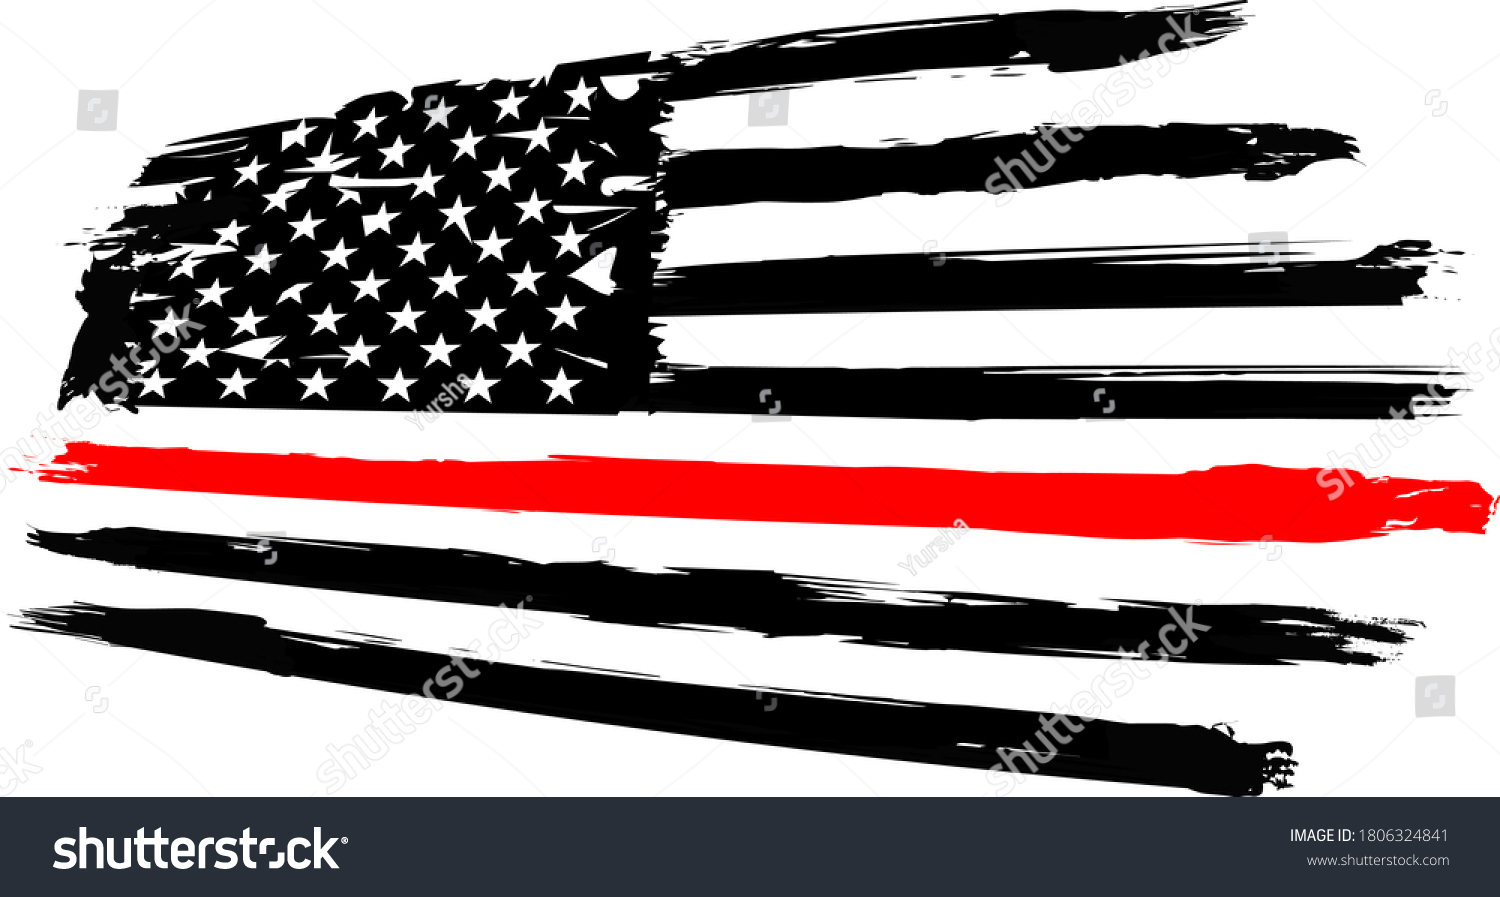 SVG of Firefighter Flag, EPS 10, Fire, Department, USA, Flag,	 svg